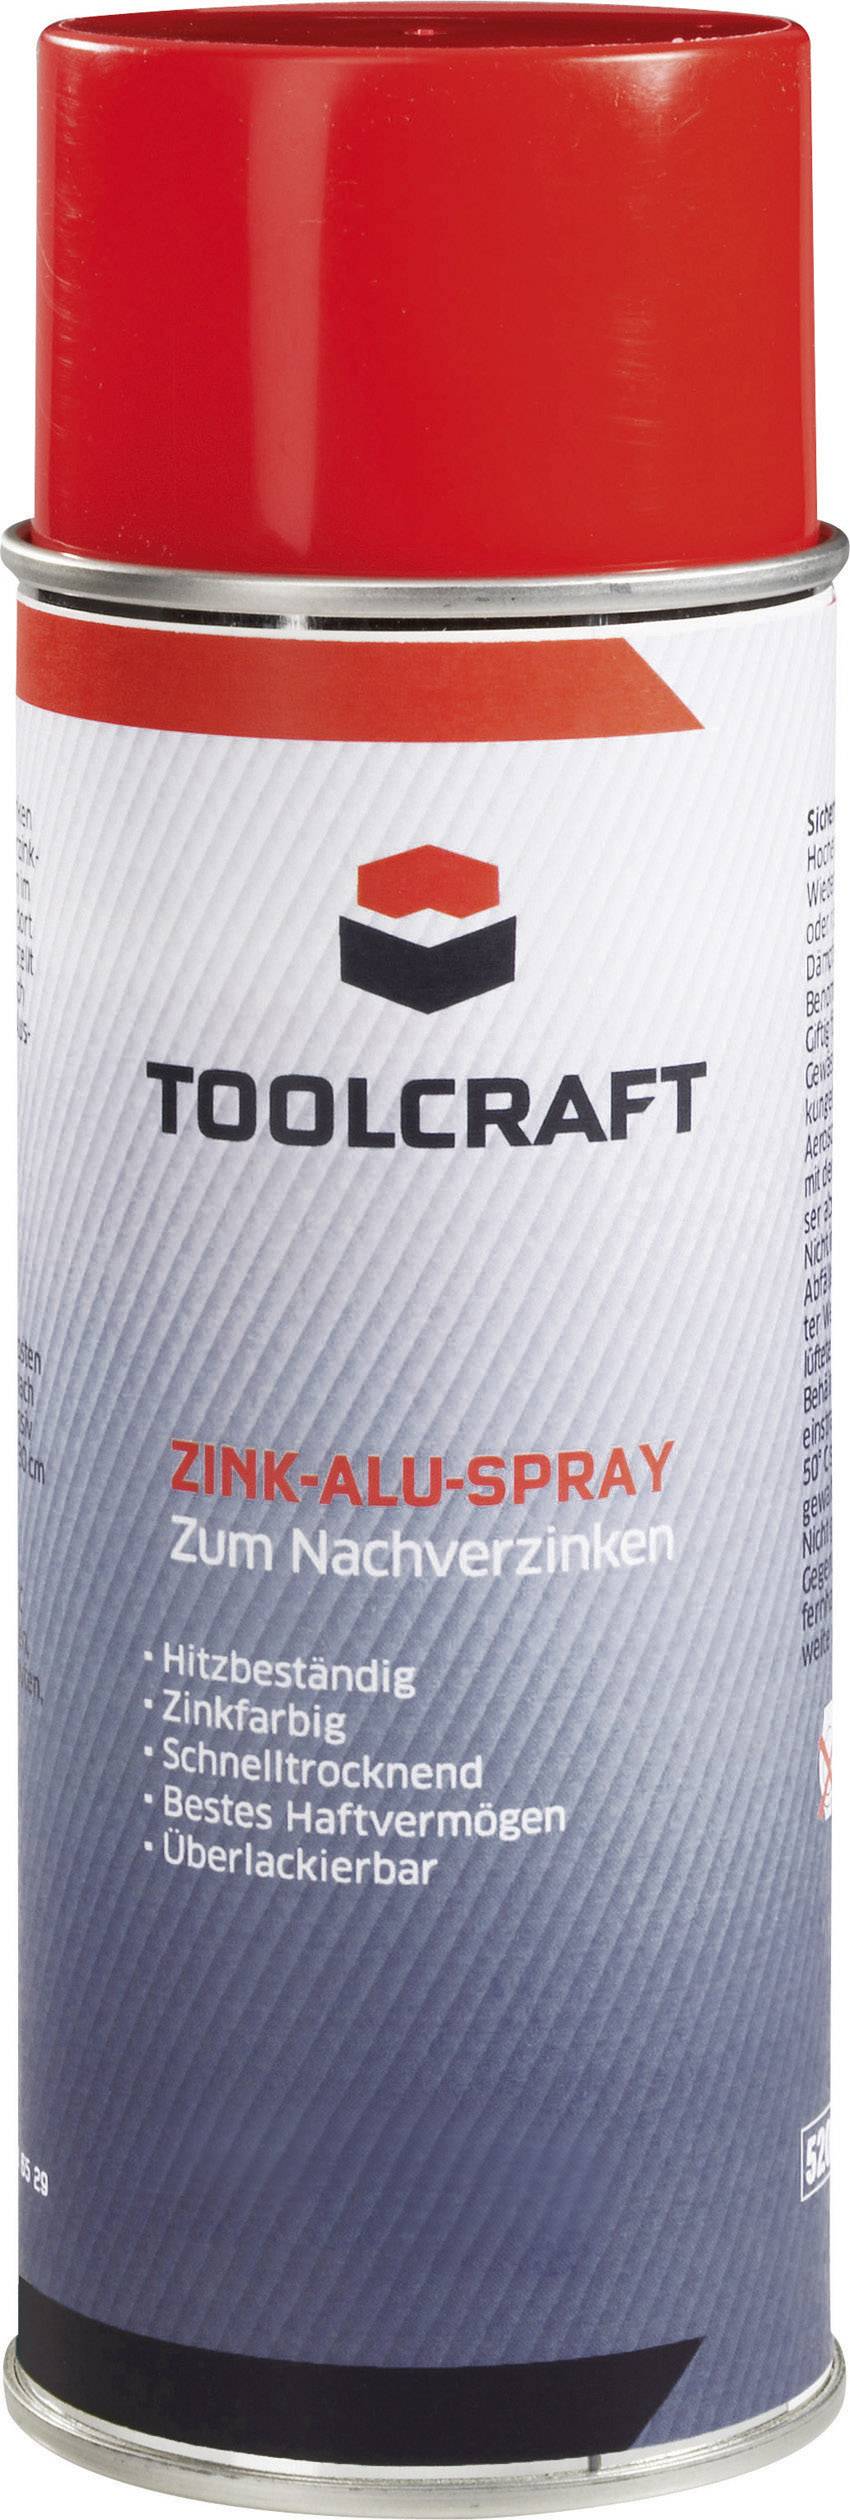 Technical Information Zink Alu Spray 